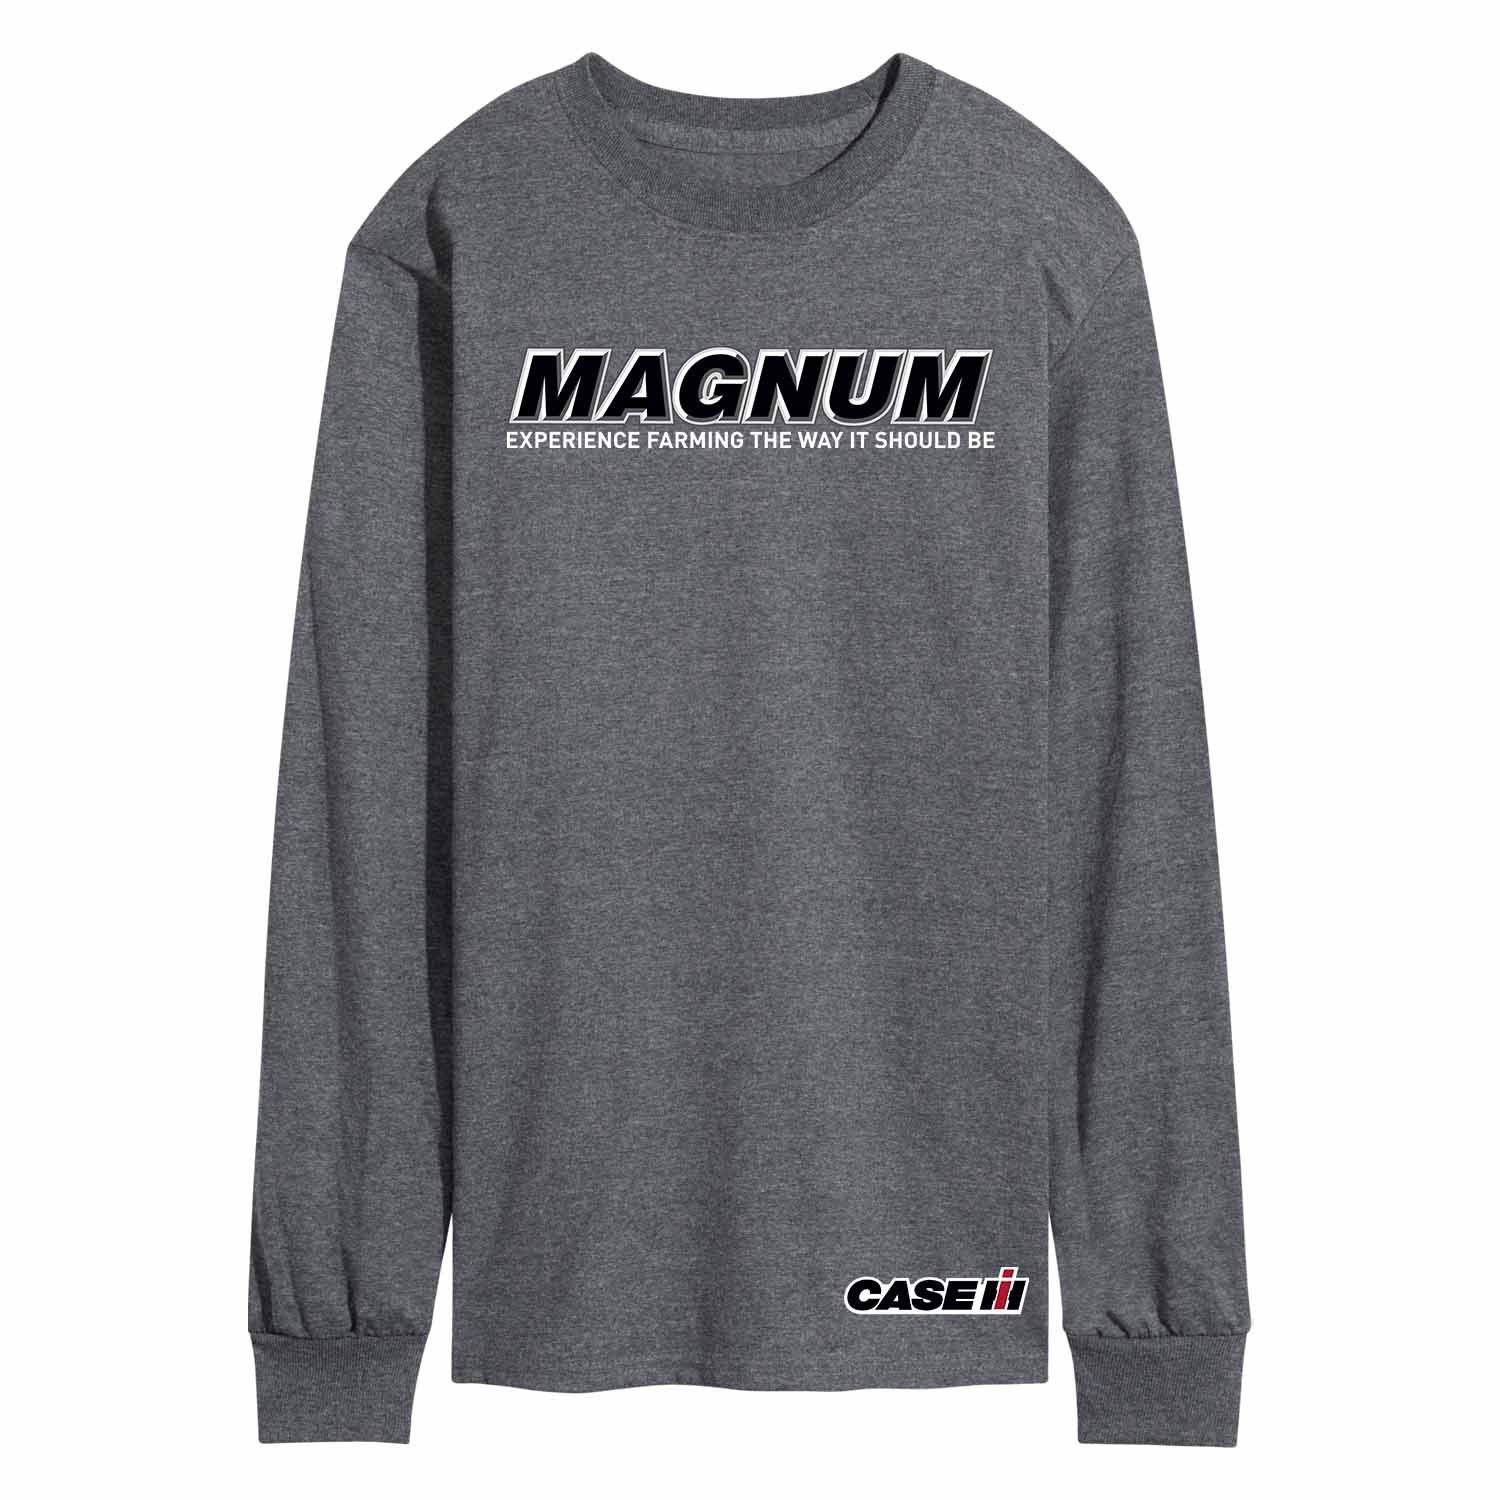 Мужская футболка Case IH Magnum Licensed Character